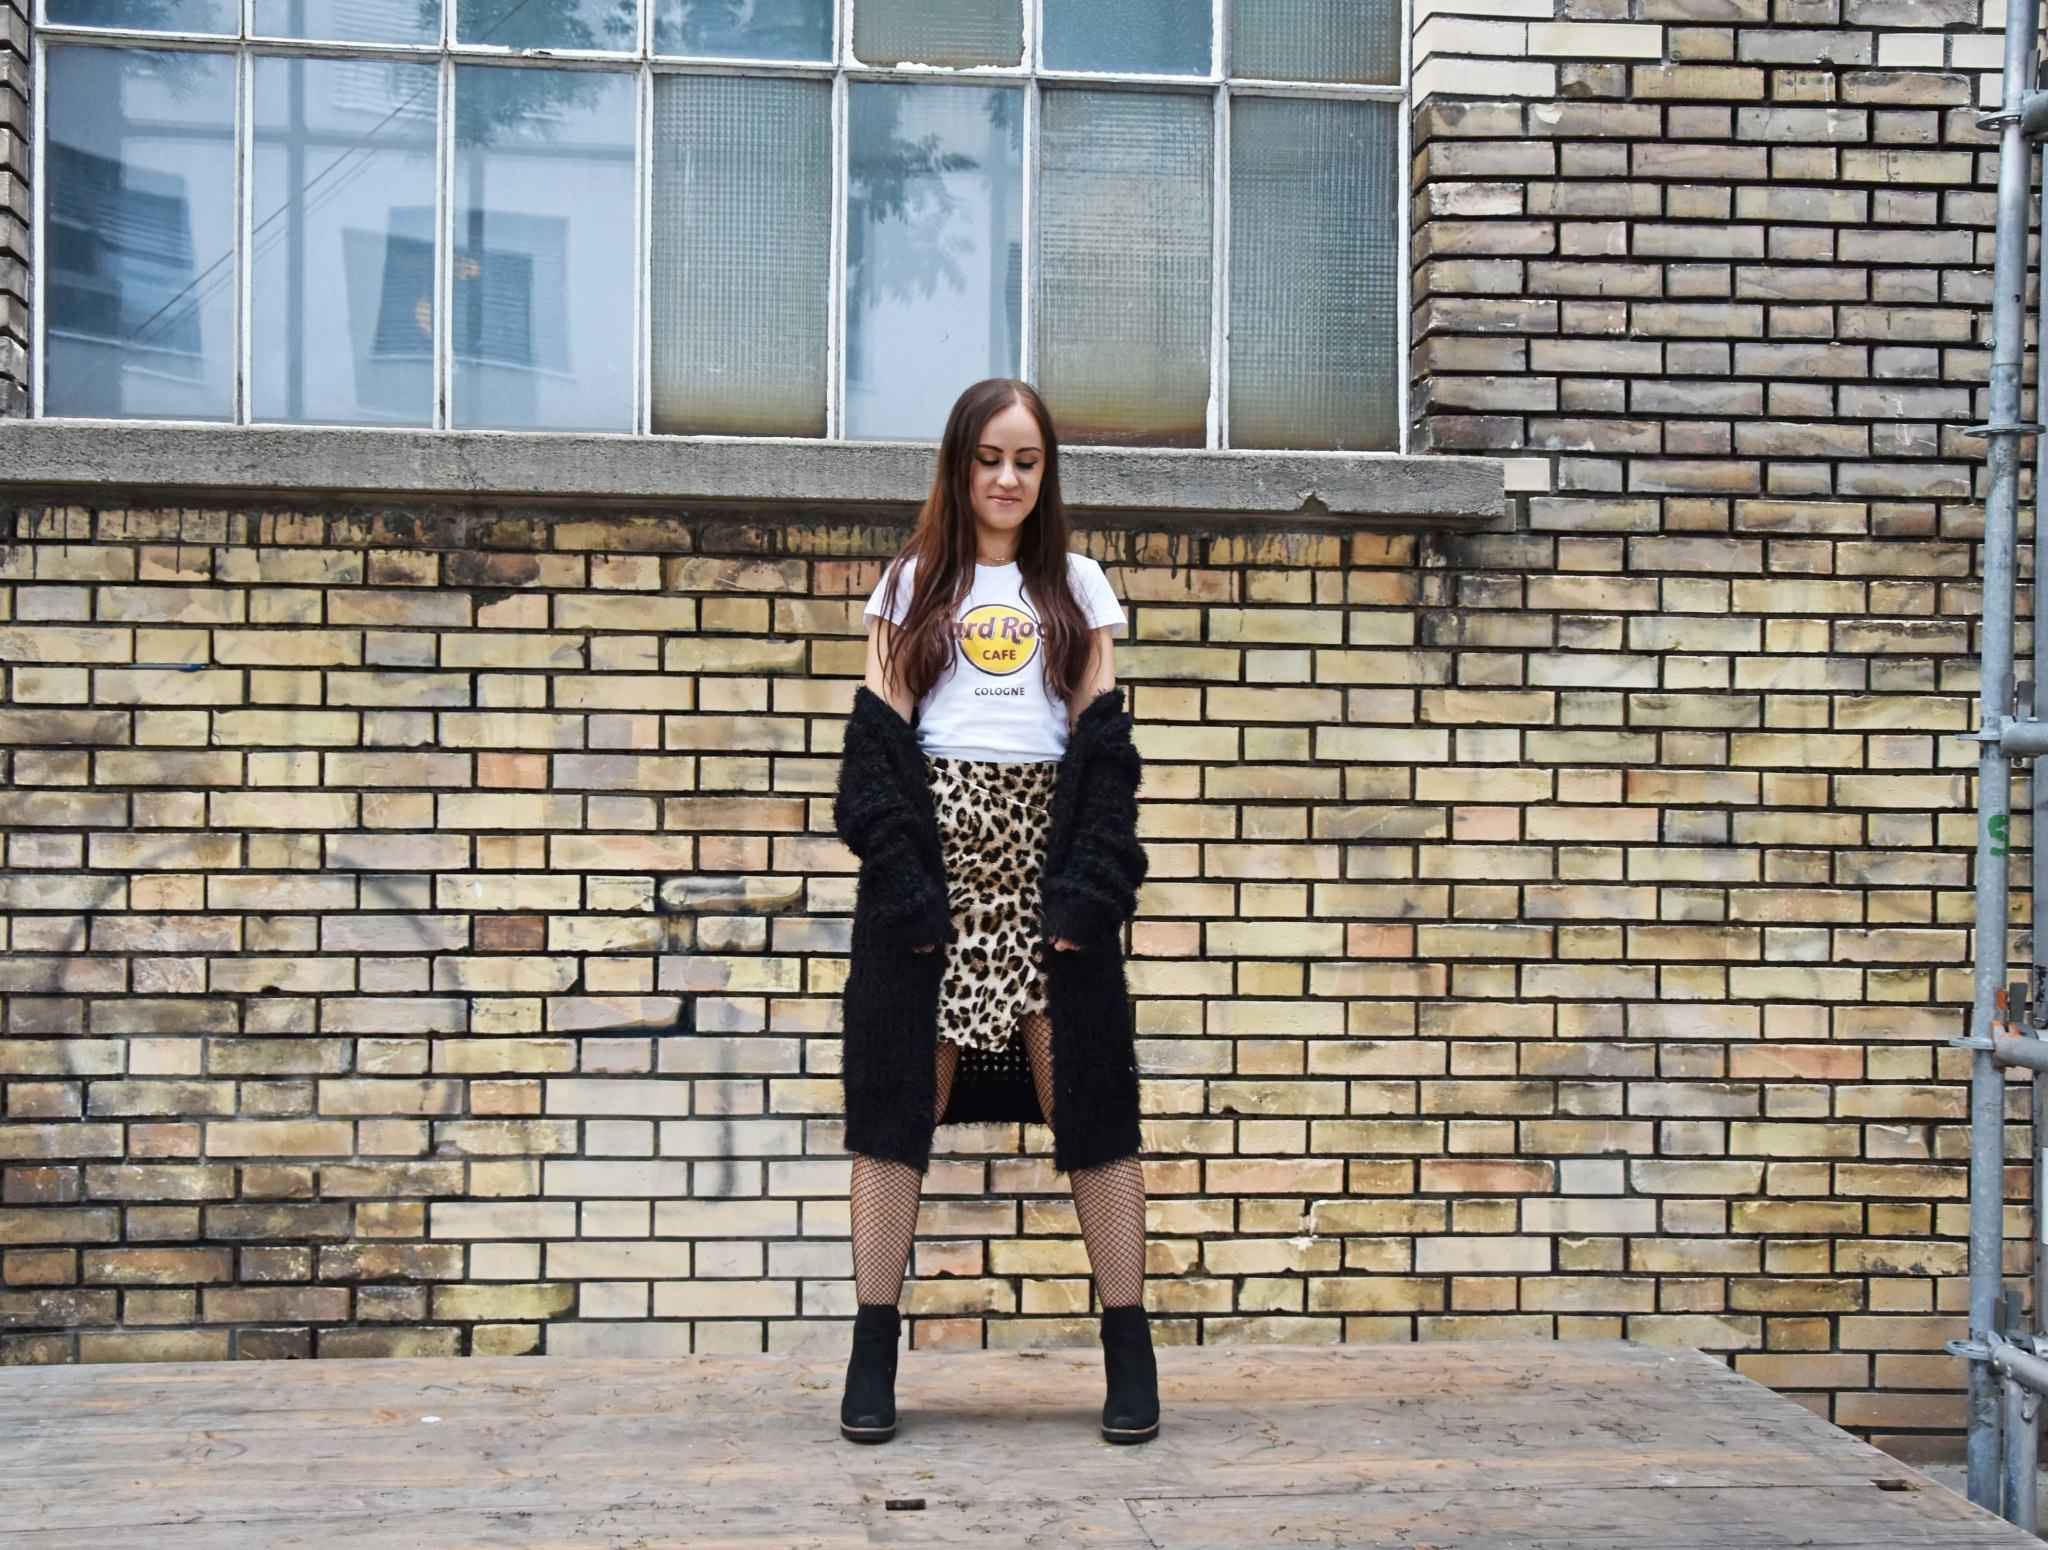 ootd, Fashion, Fashionblogger, Fashionblog, H&M, Outfit Leopard Mini Skirt, Fishnet Tights, Statement Shirt